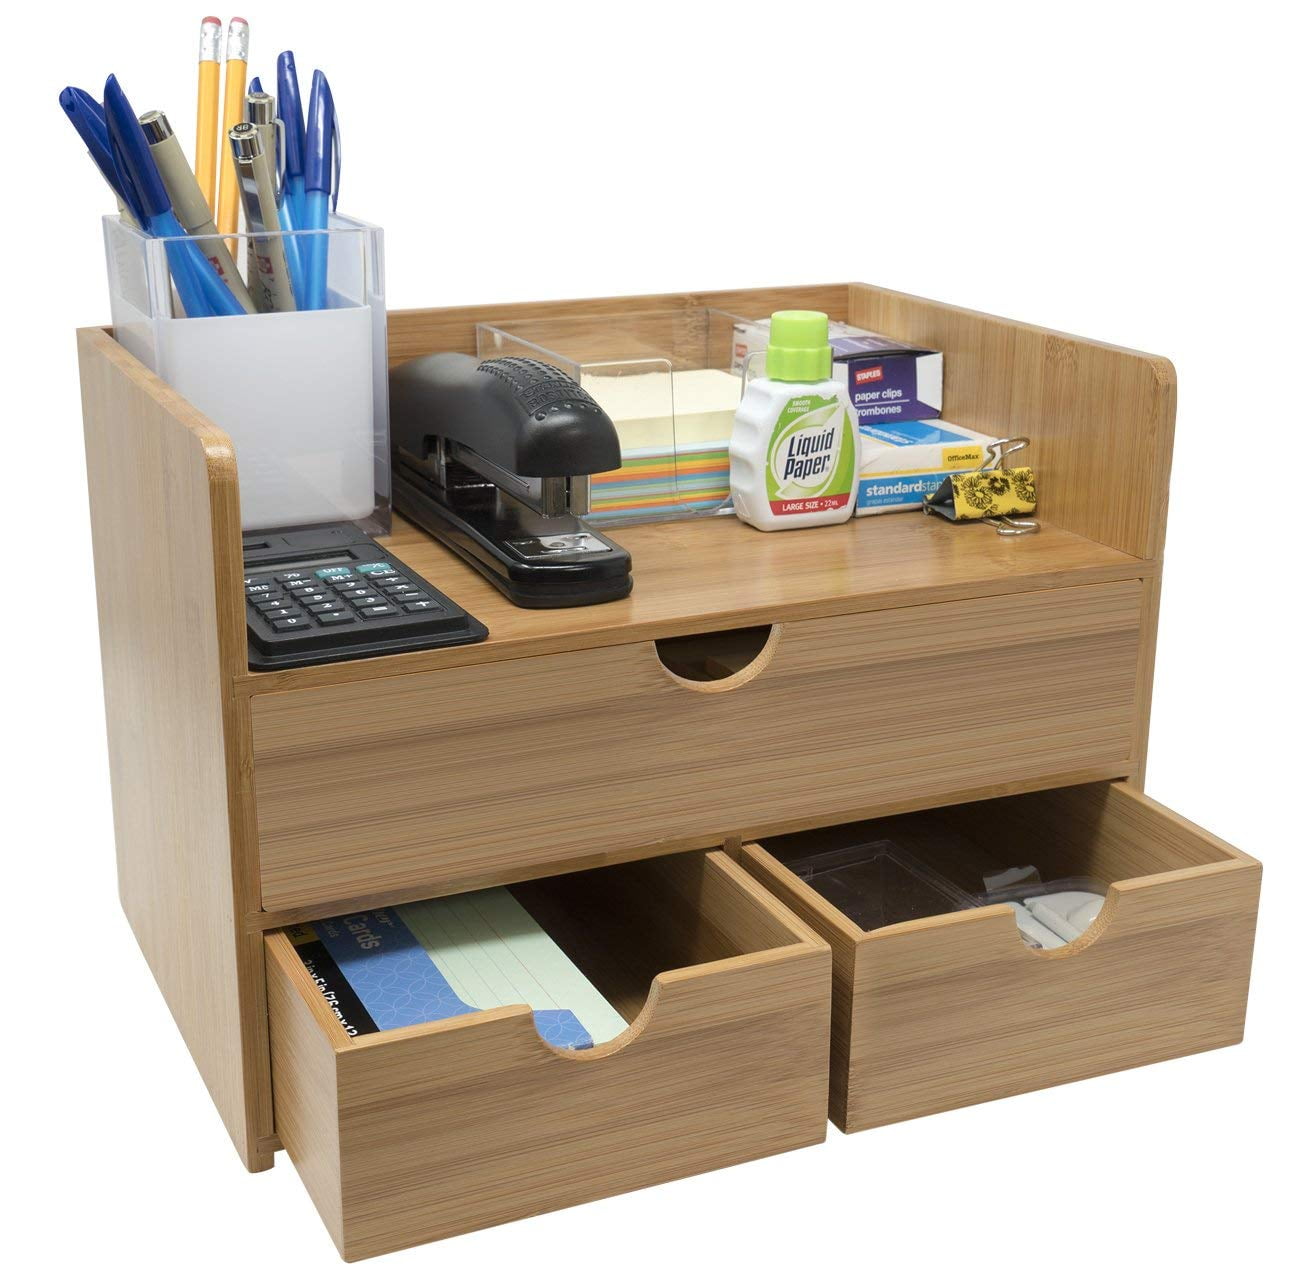 DESKBUCKIT Desk Organizer, Office Supplies Organizer, Wood Tool